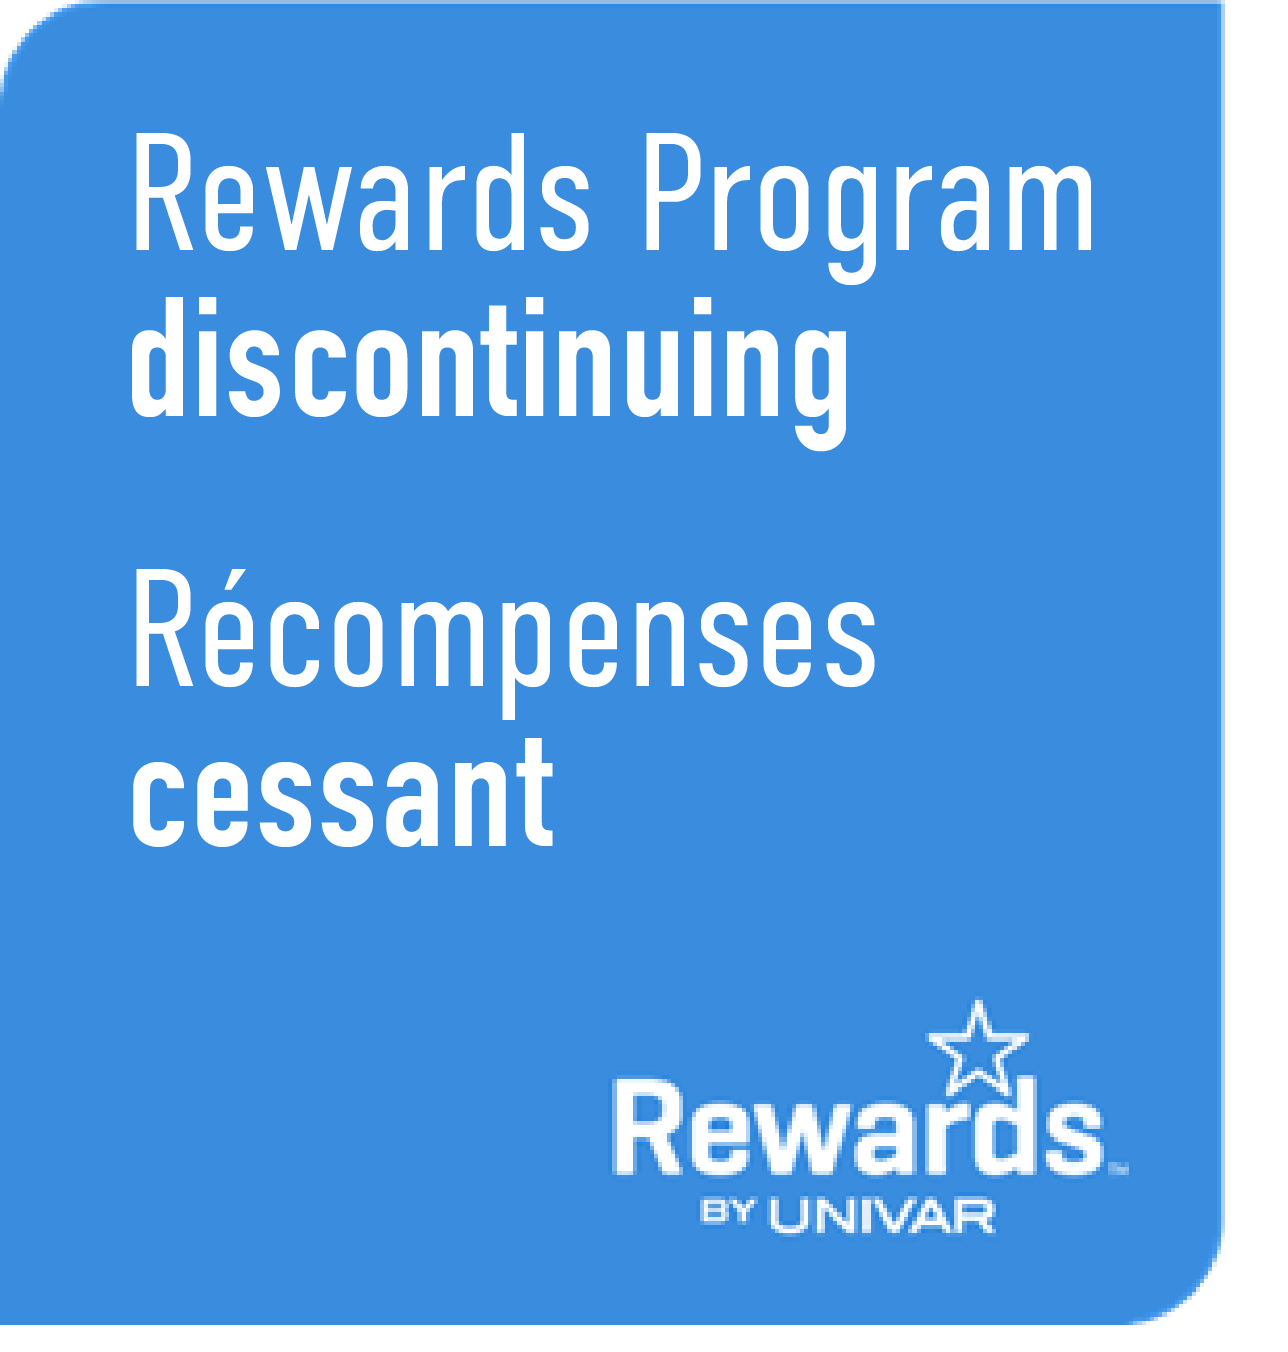 Rewards program discontinued